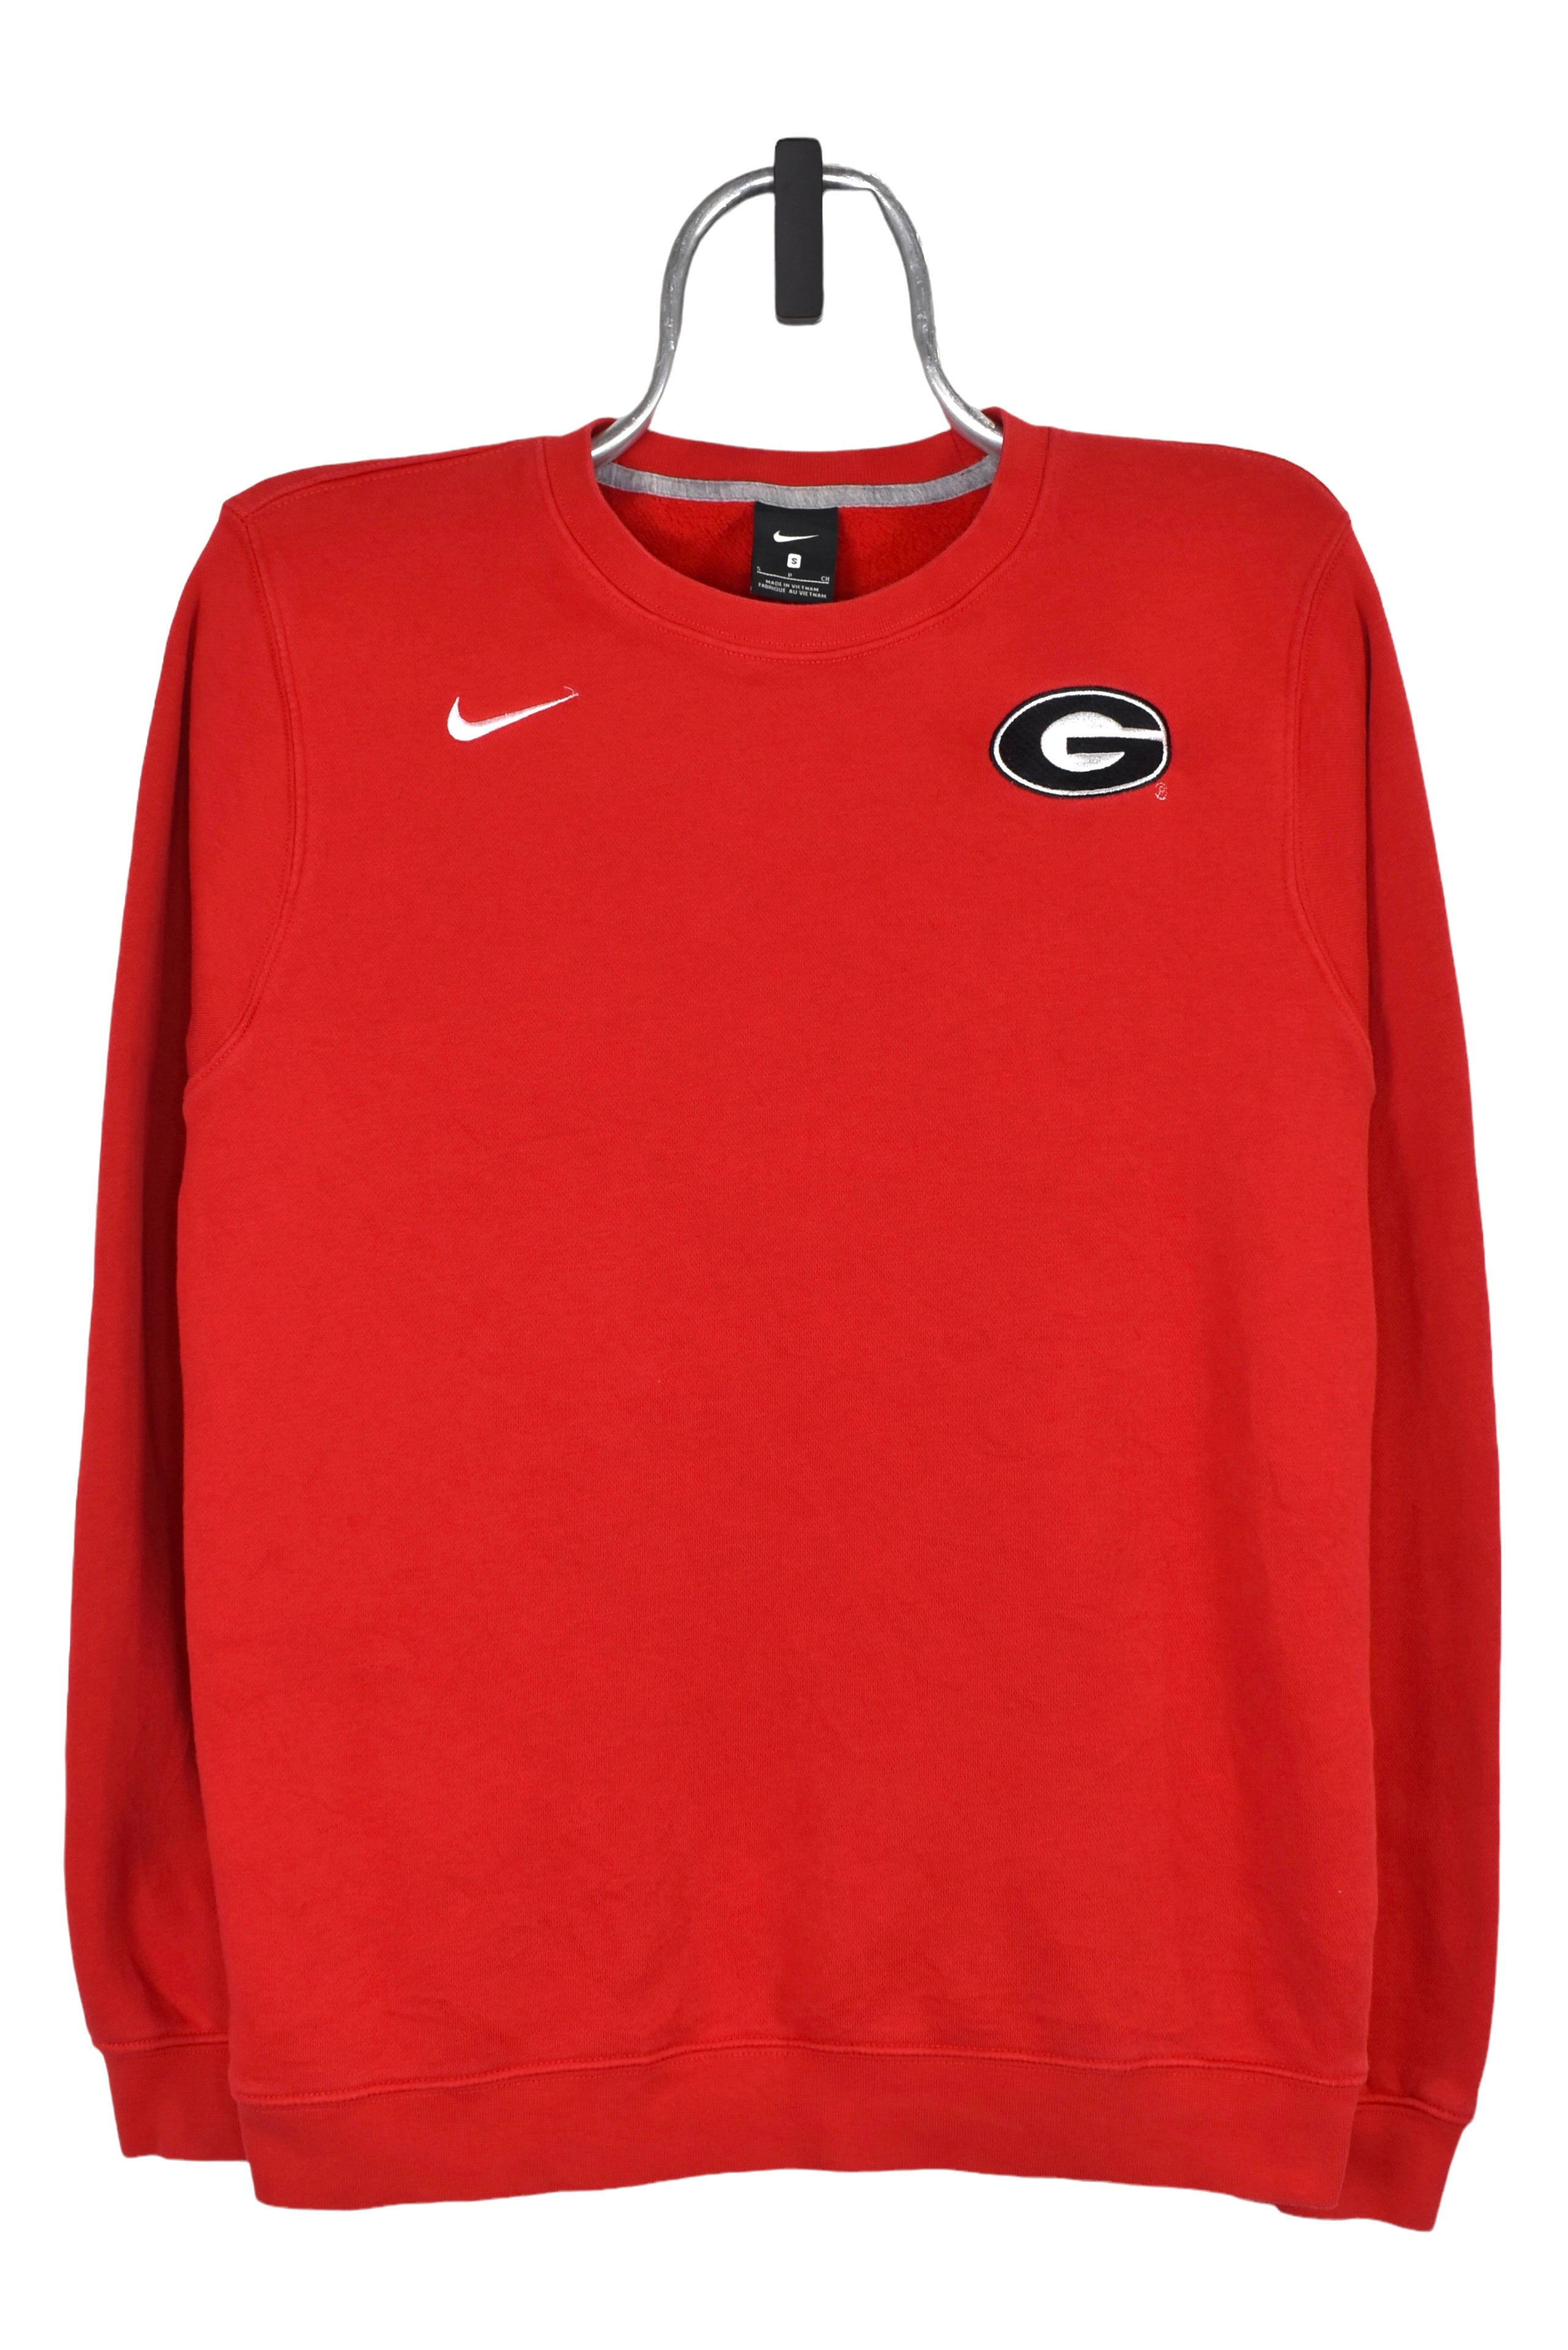 Vintage Georgia Bulldogs sweatshirt (M), red Nike embroidered crewneck